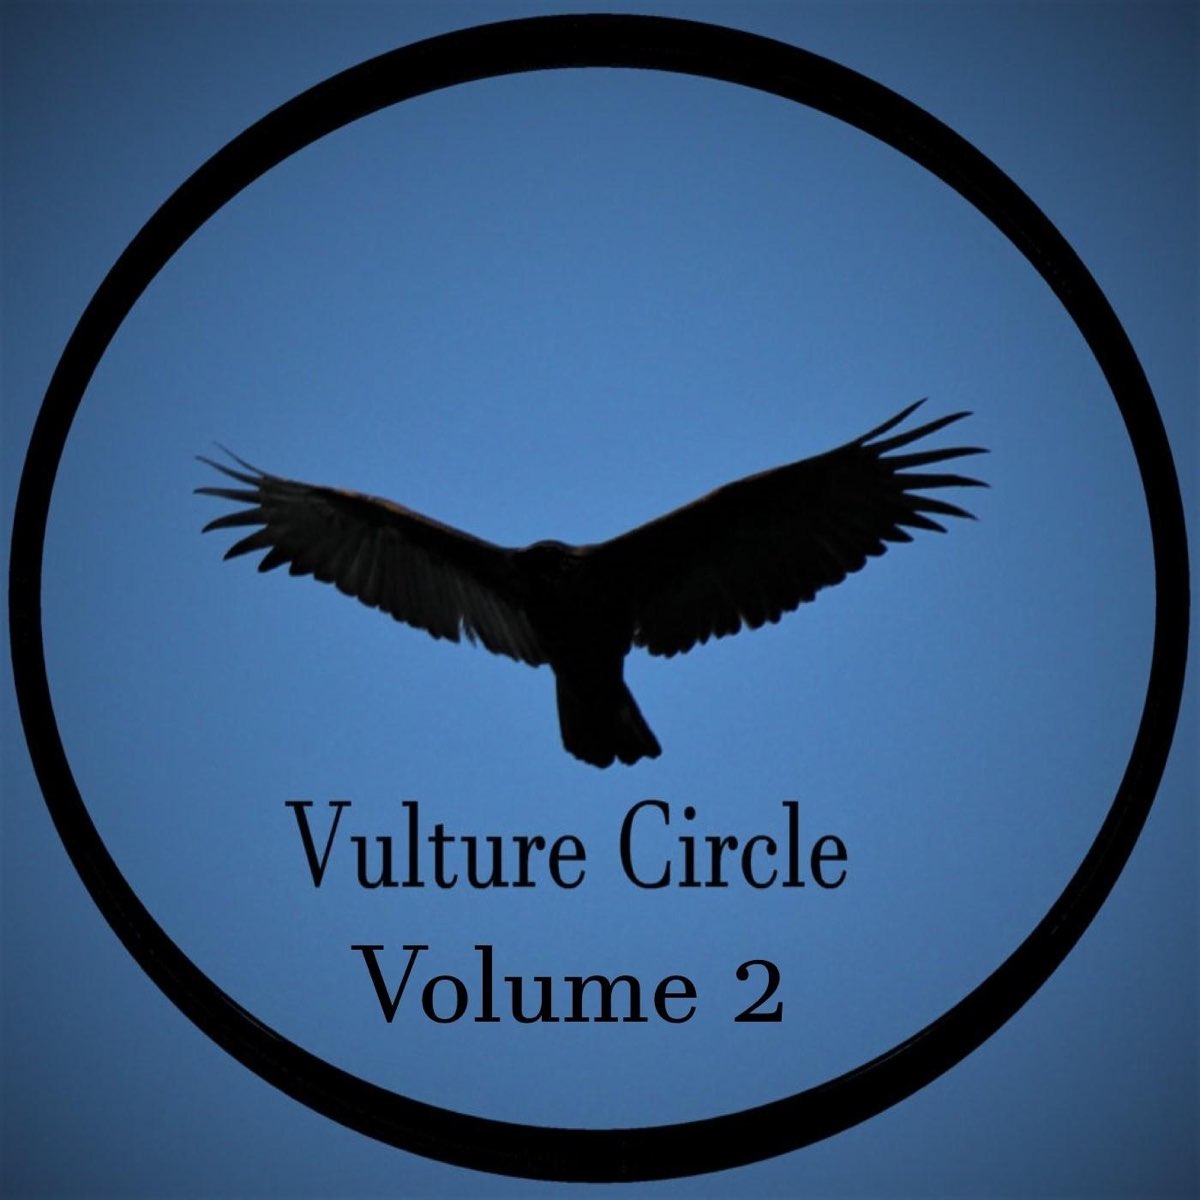 Circle альбом. Логотип альбома Vultures. Vultures Gathering группа обложка альбома. Vultures album Cover vol1.